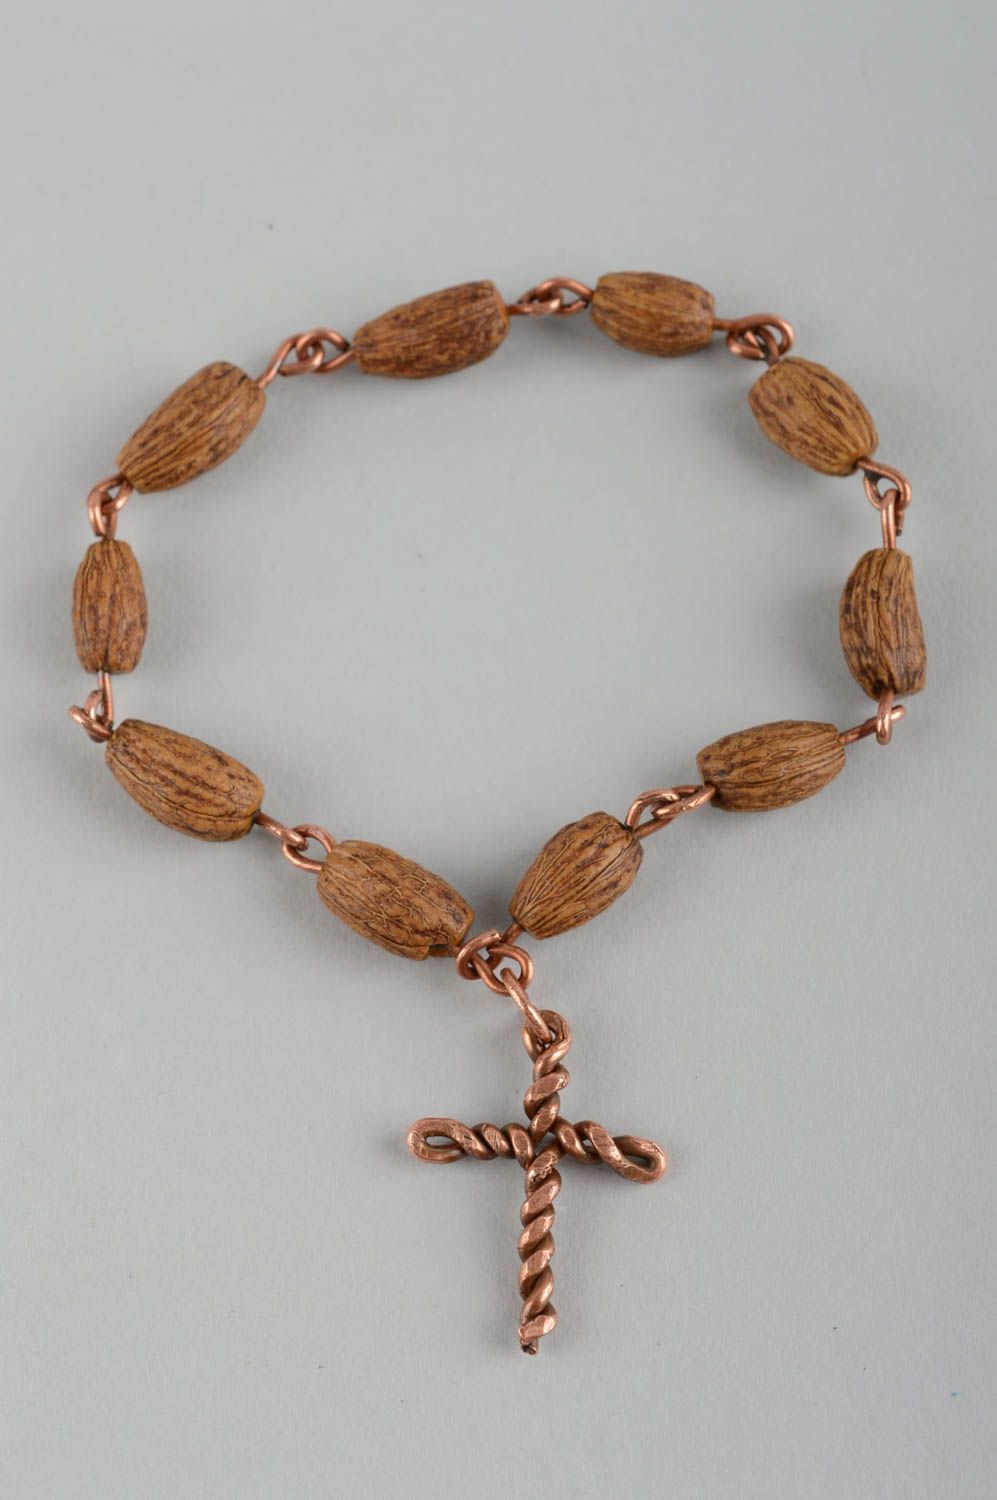 Spiritual gifts handmade rosary beads prayer rope church accessories gift ideas photo 2